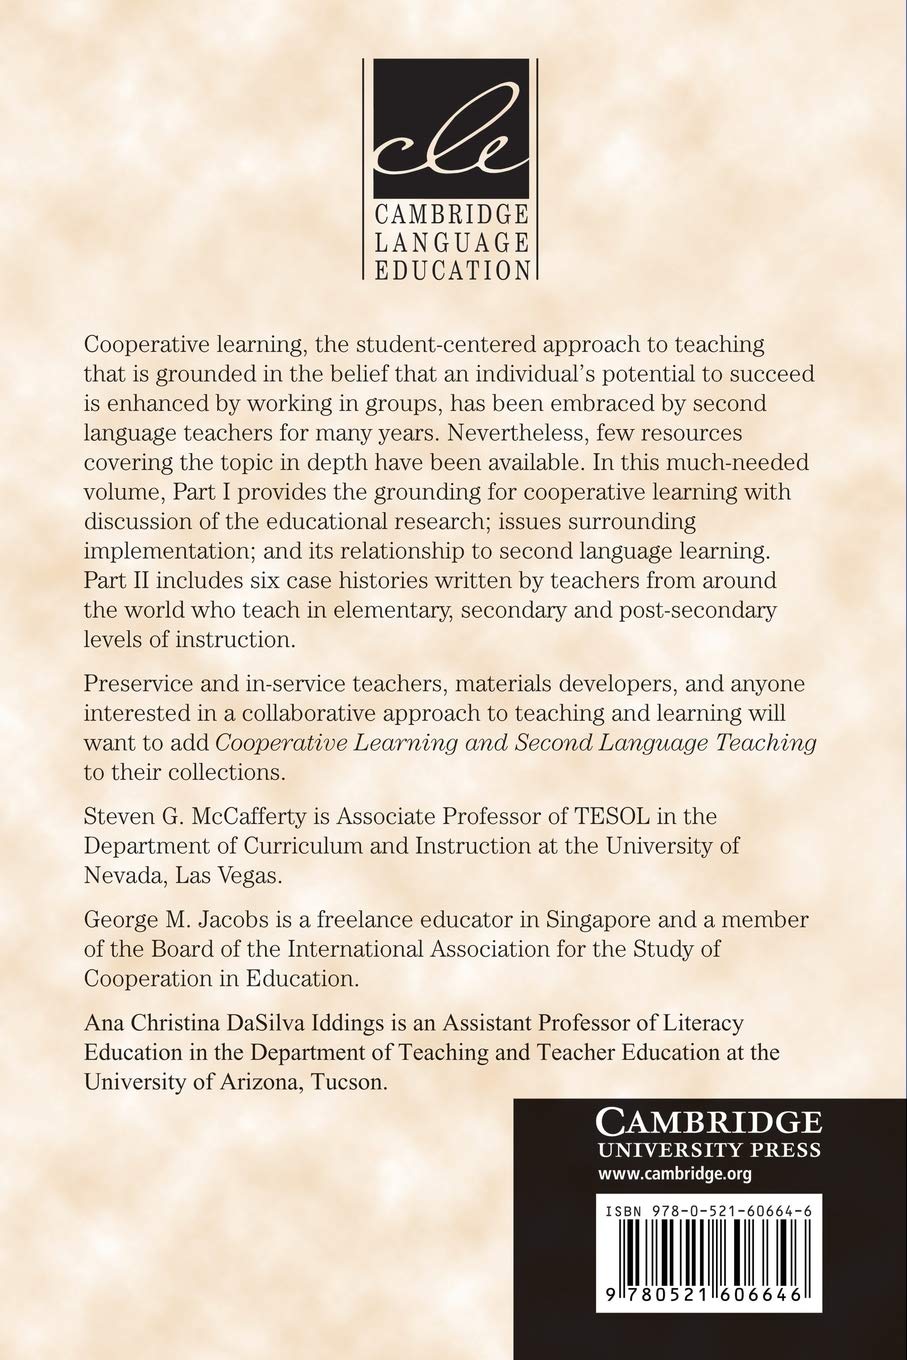 原文現貨 Cooperative Learning and Second Language Teaching (Cambridge Language Education) 1st Edition 合作學習與第二語言教學（劍橋語言教育）第1版